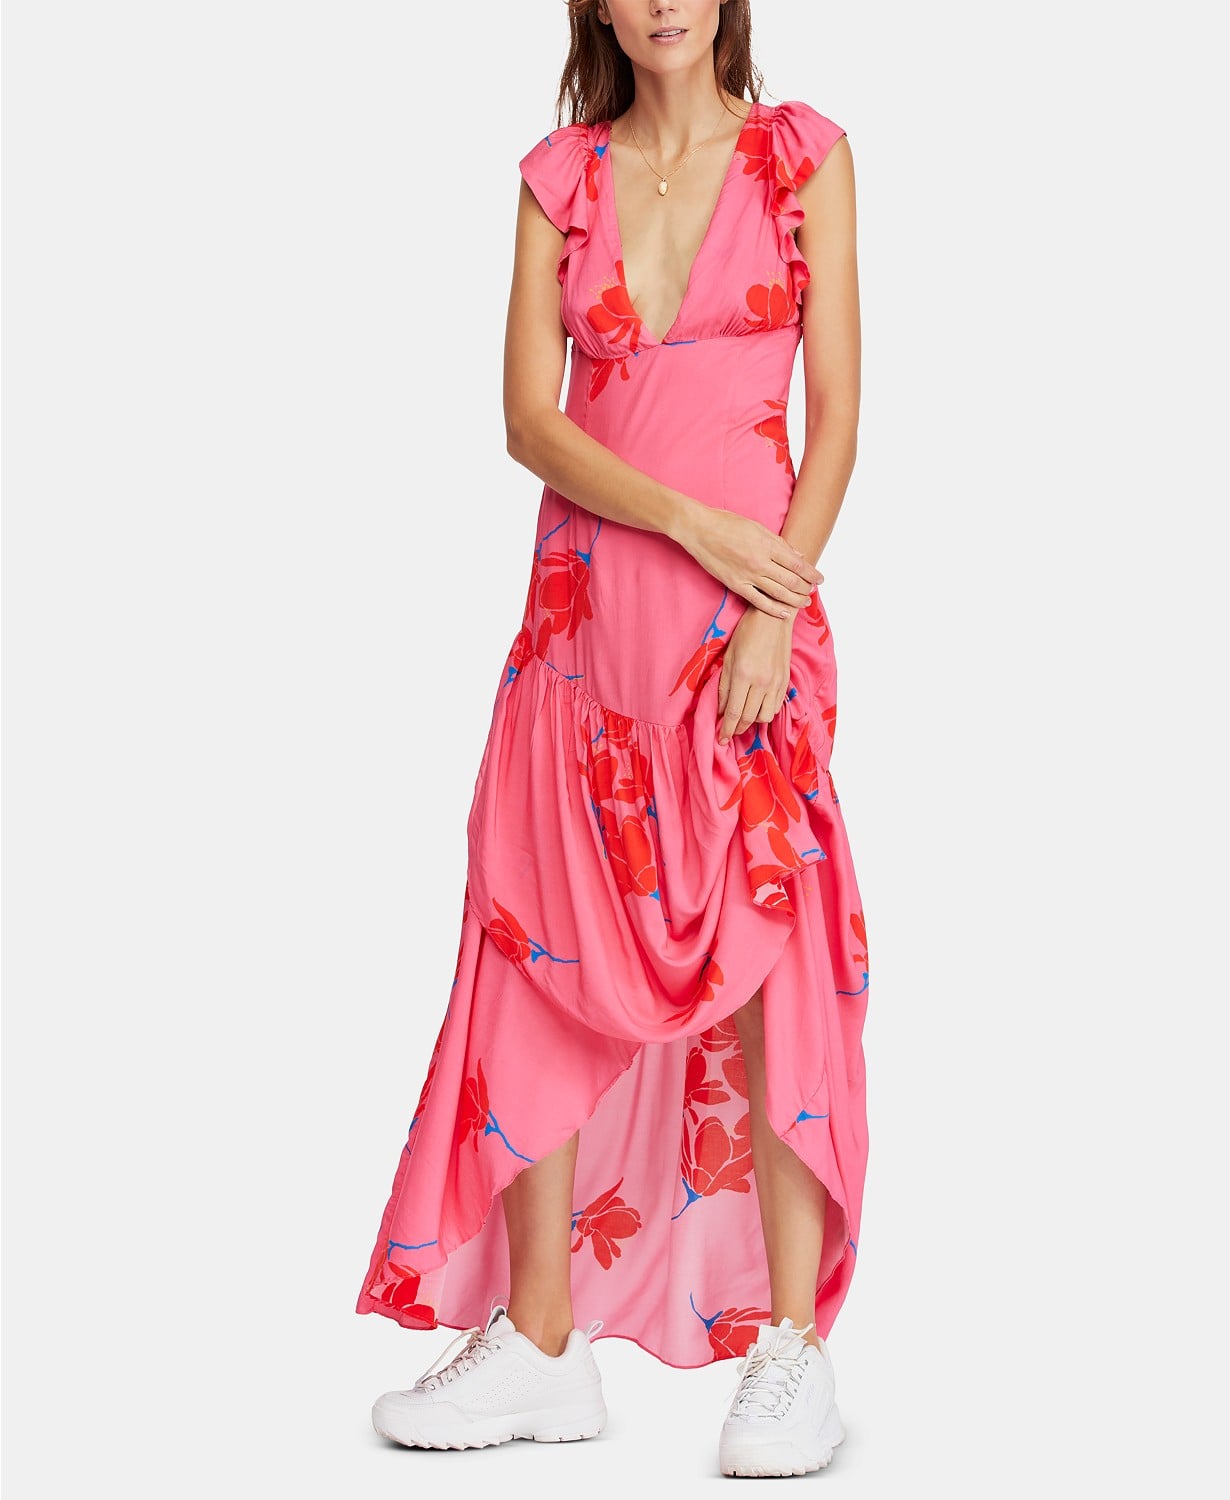 Buy > macy's fall dresses > in stock